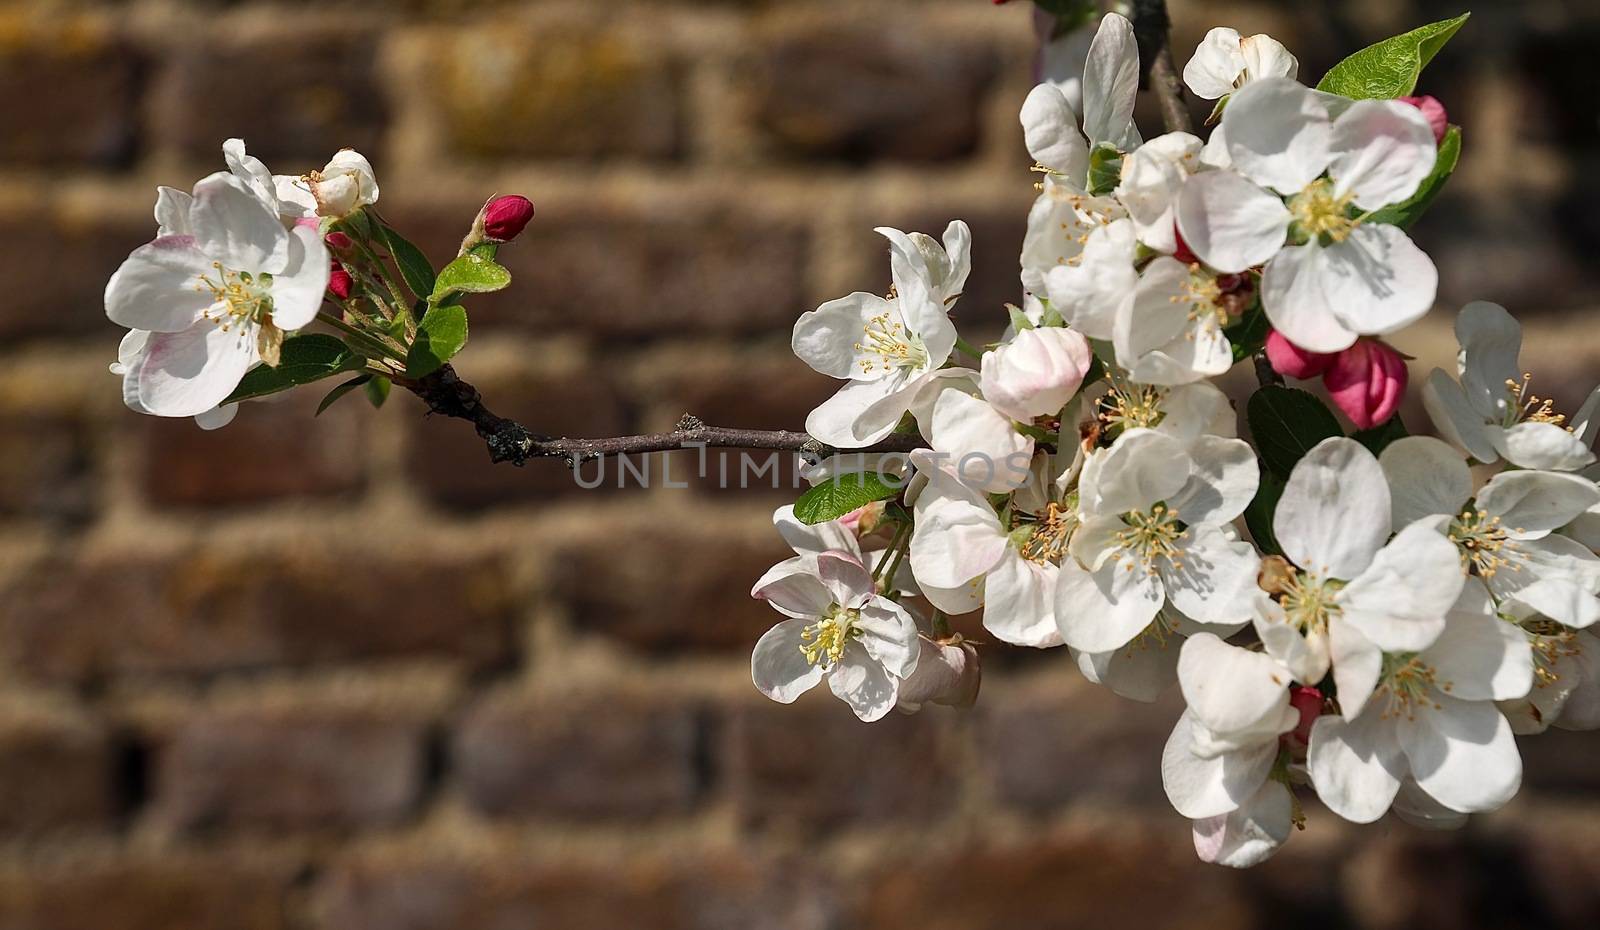 Macro of a blooming apple tree in spring by Stimmungsbilder